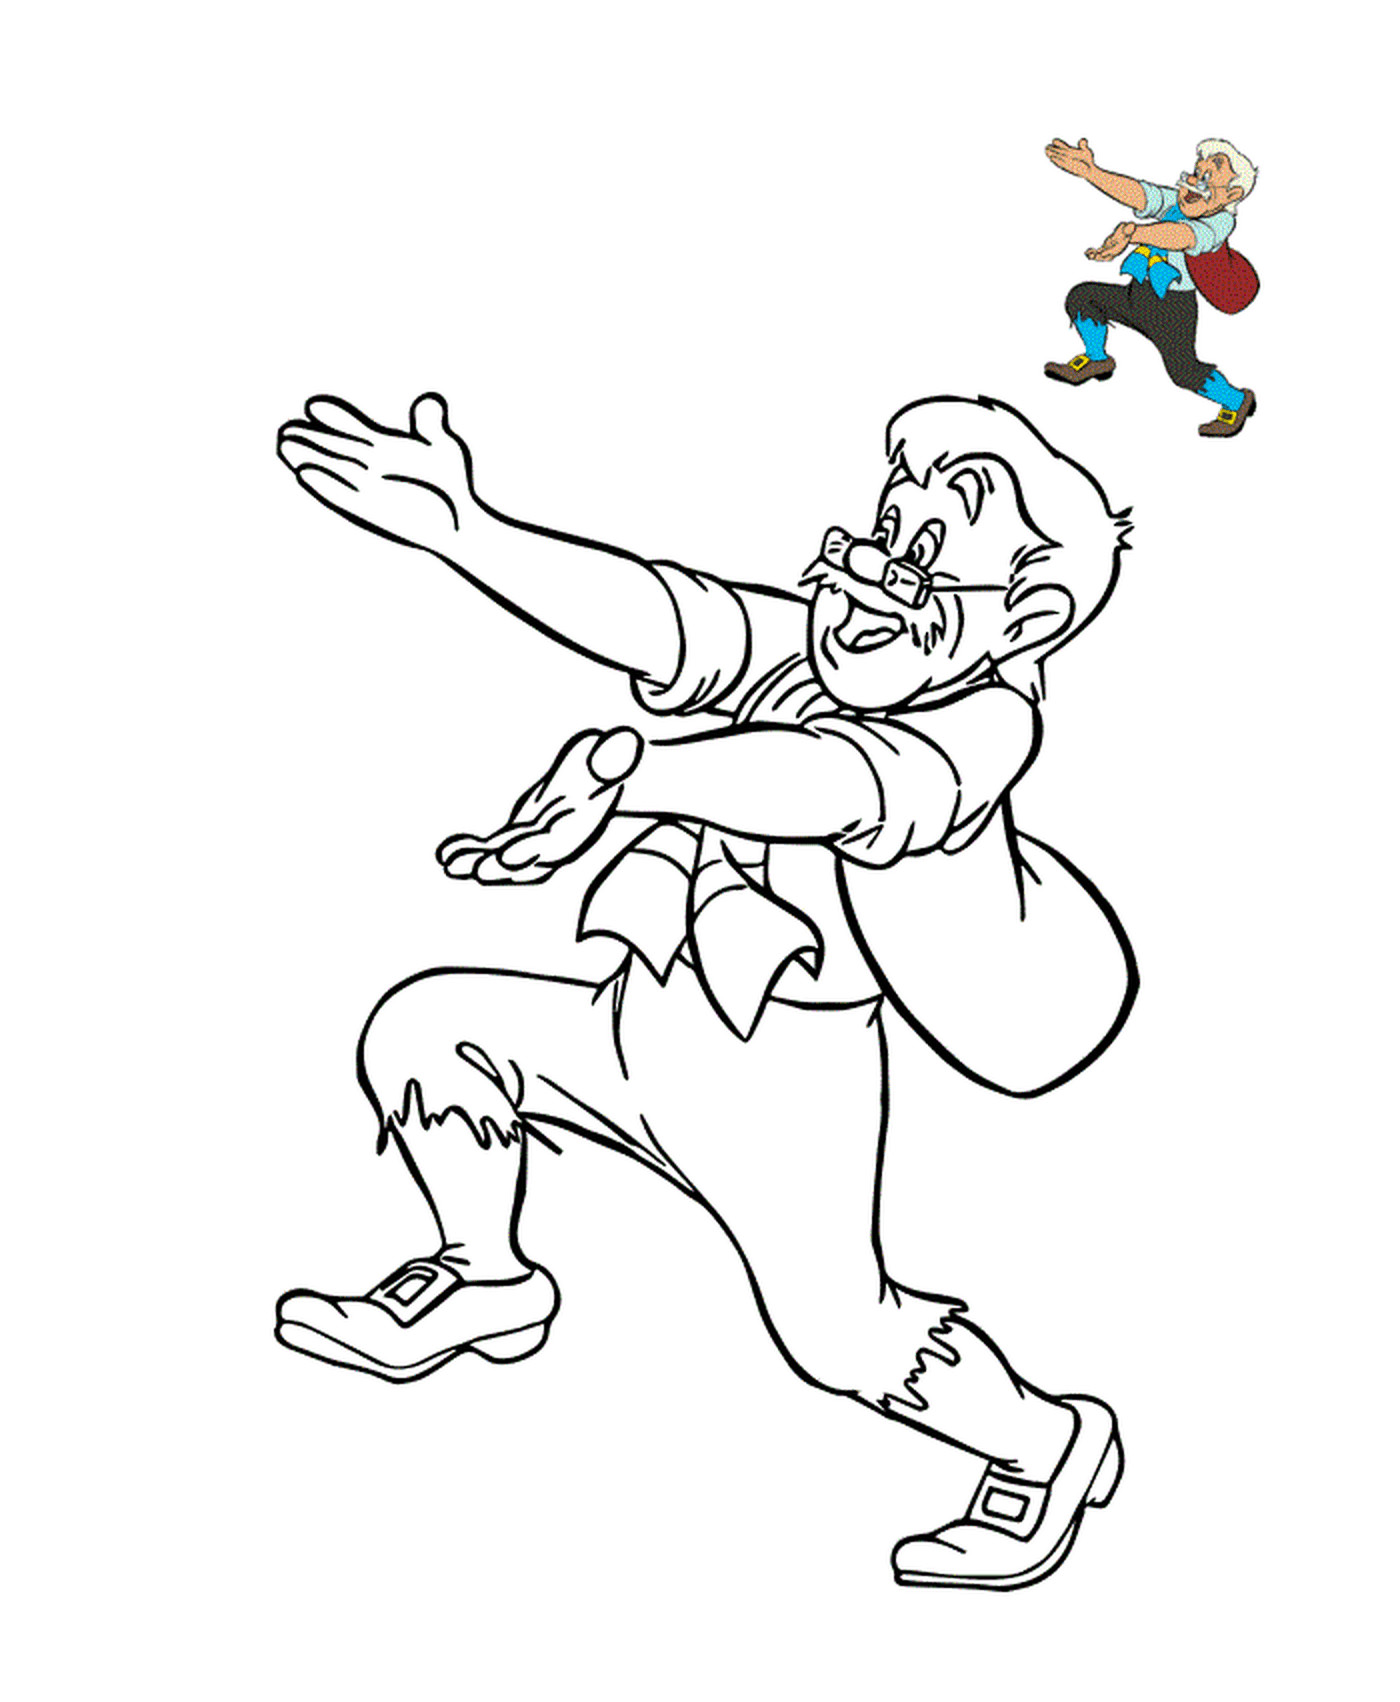  Geppetto, modest Italian carpenter 